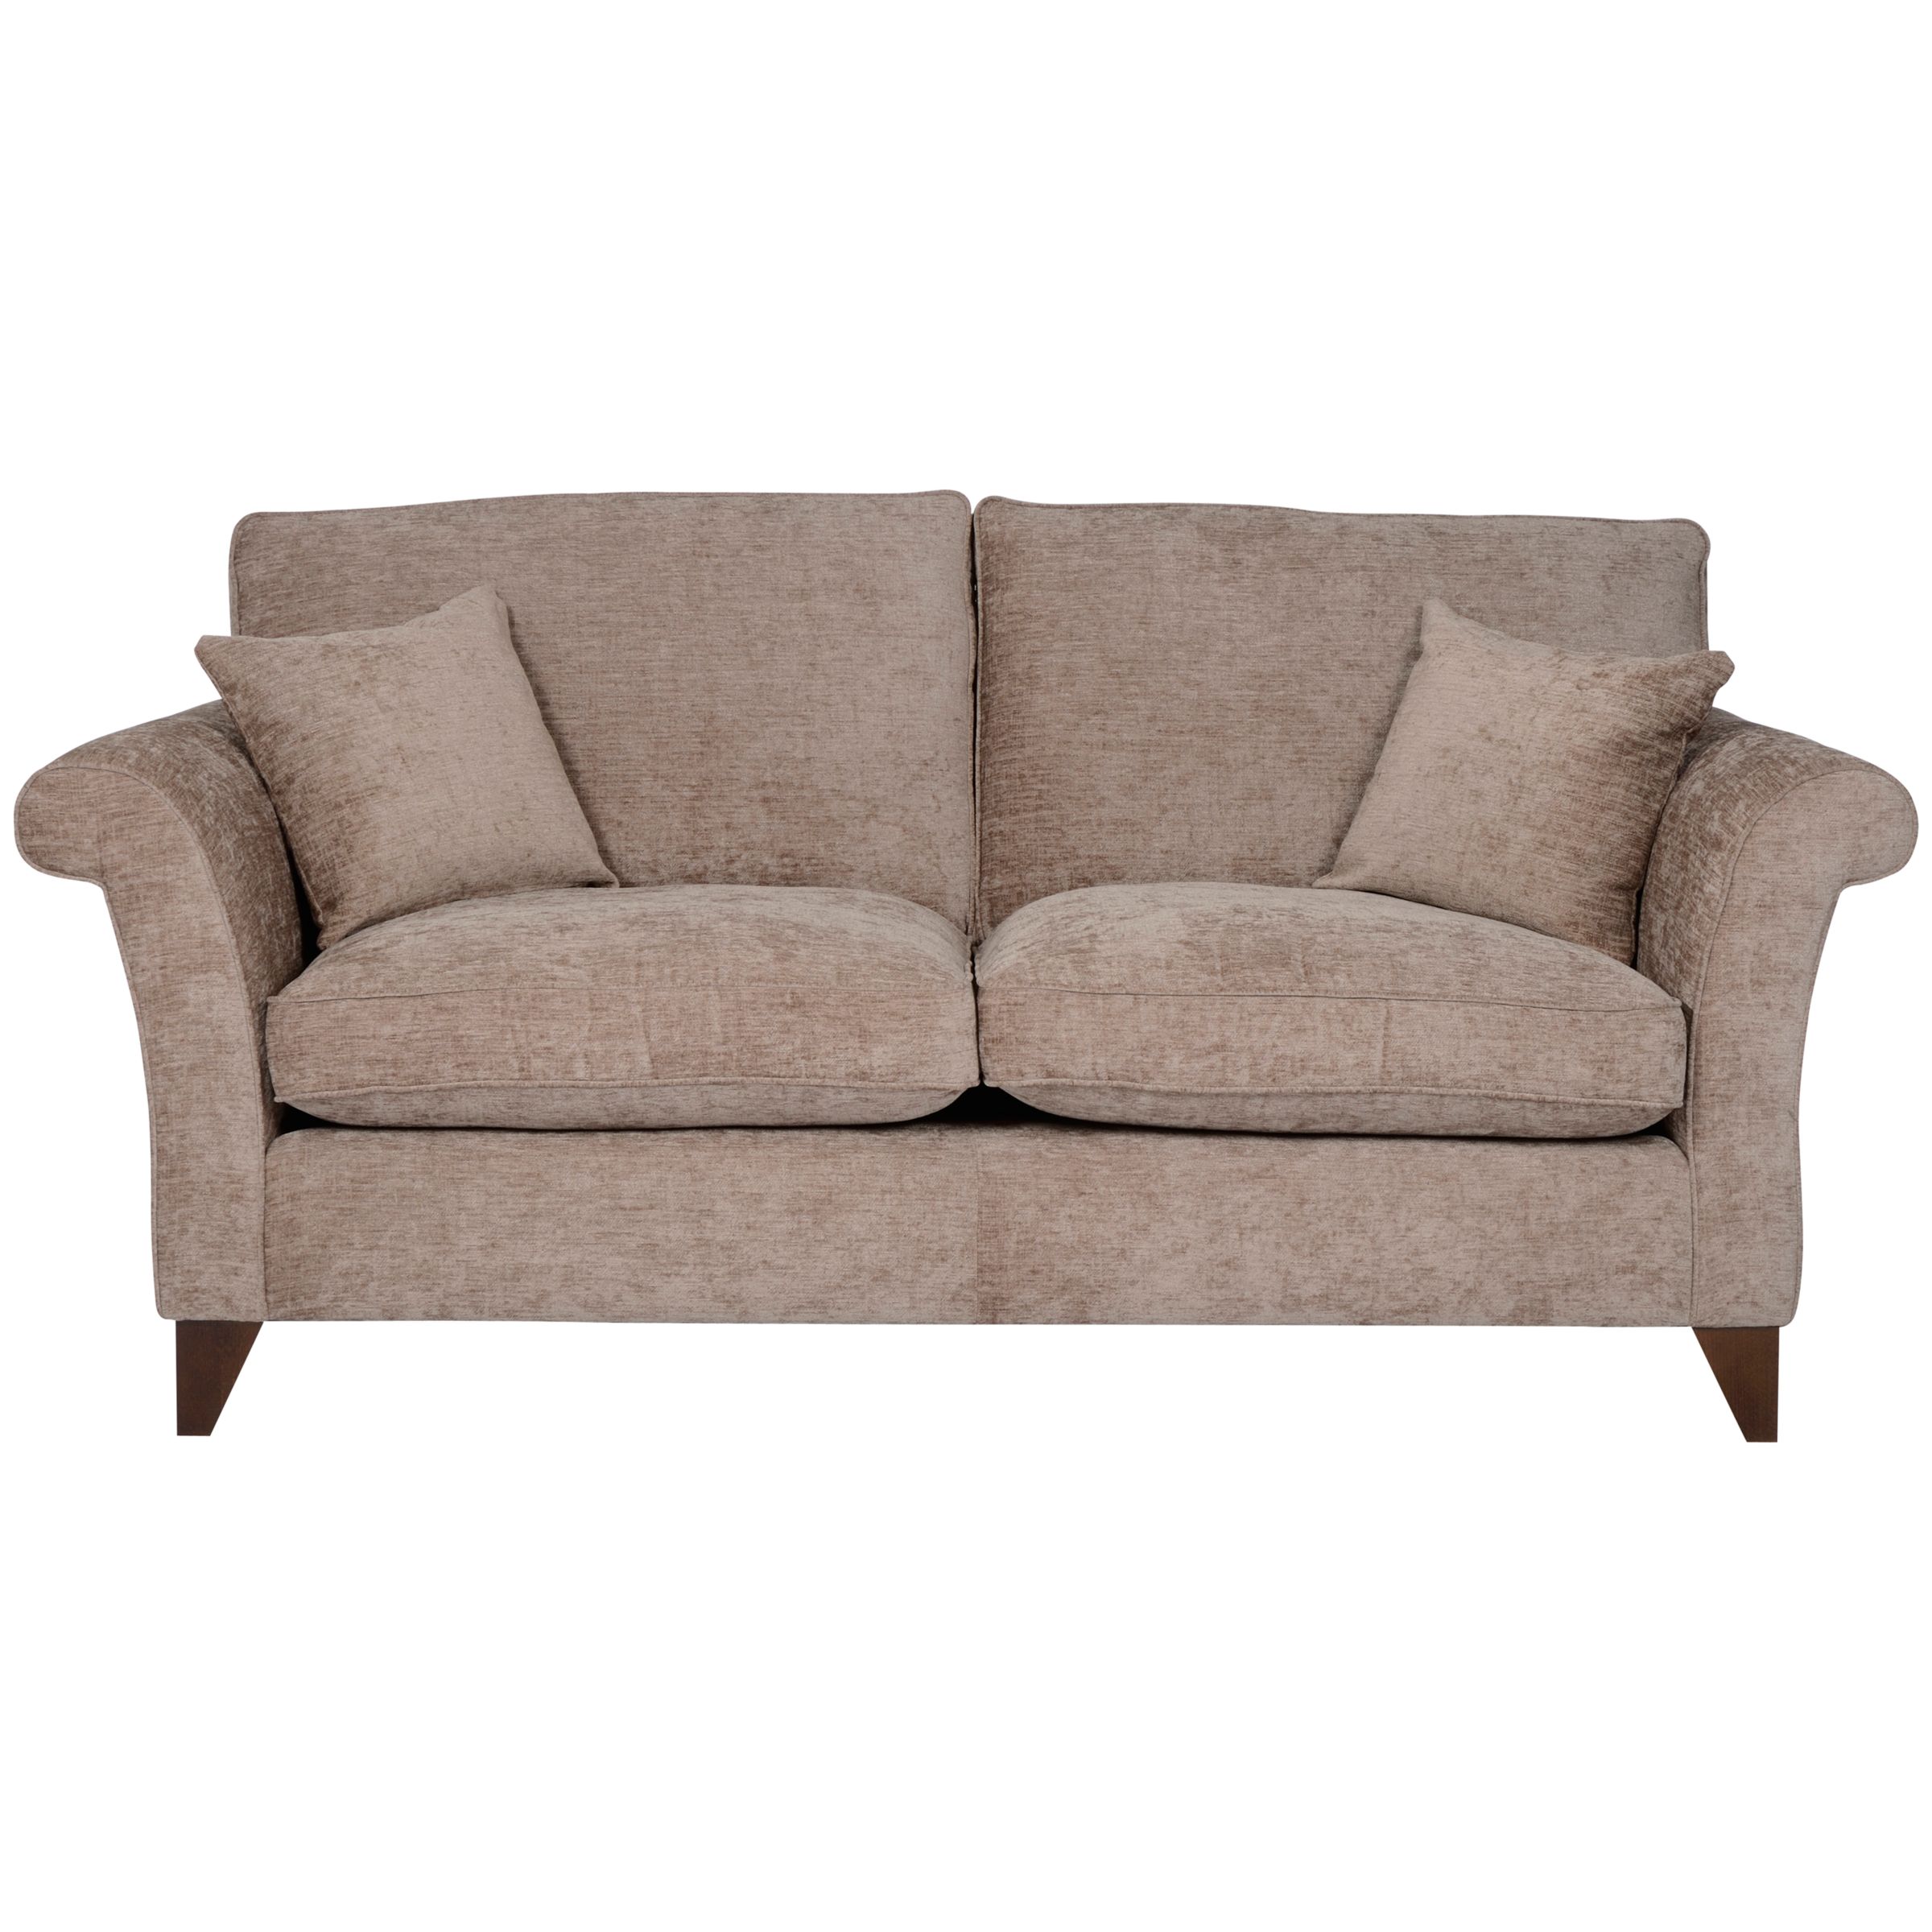 John Lewis Charlotte Large Sofa, Hampton Mink, width 197cm